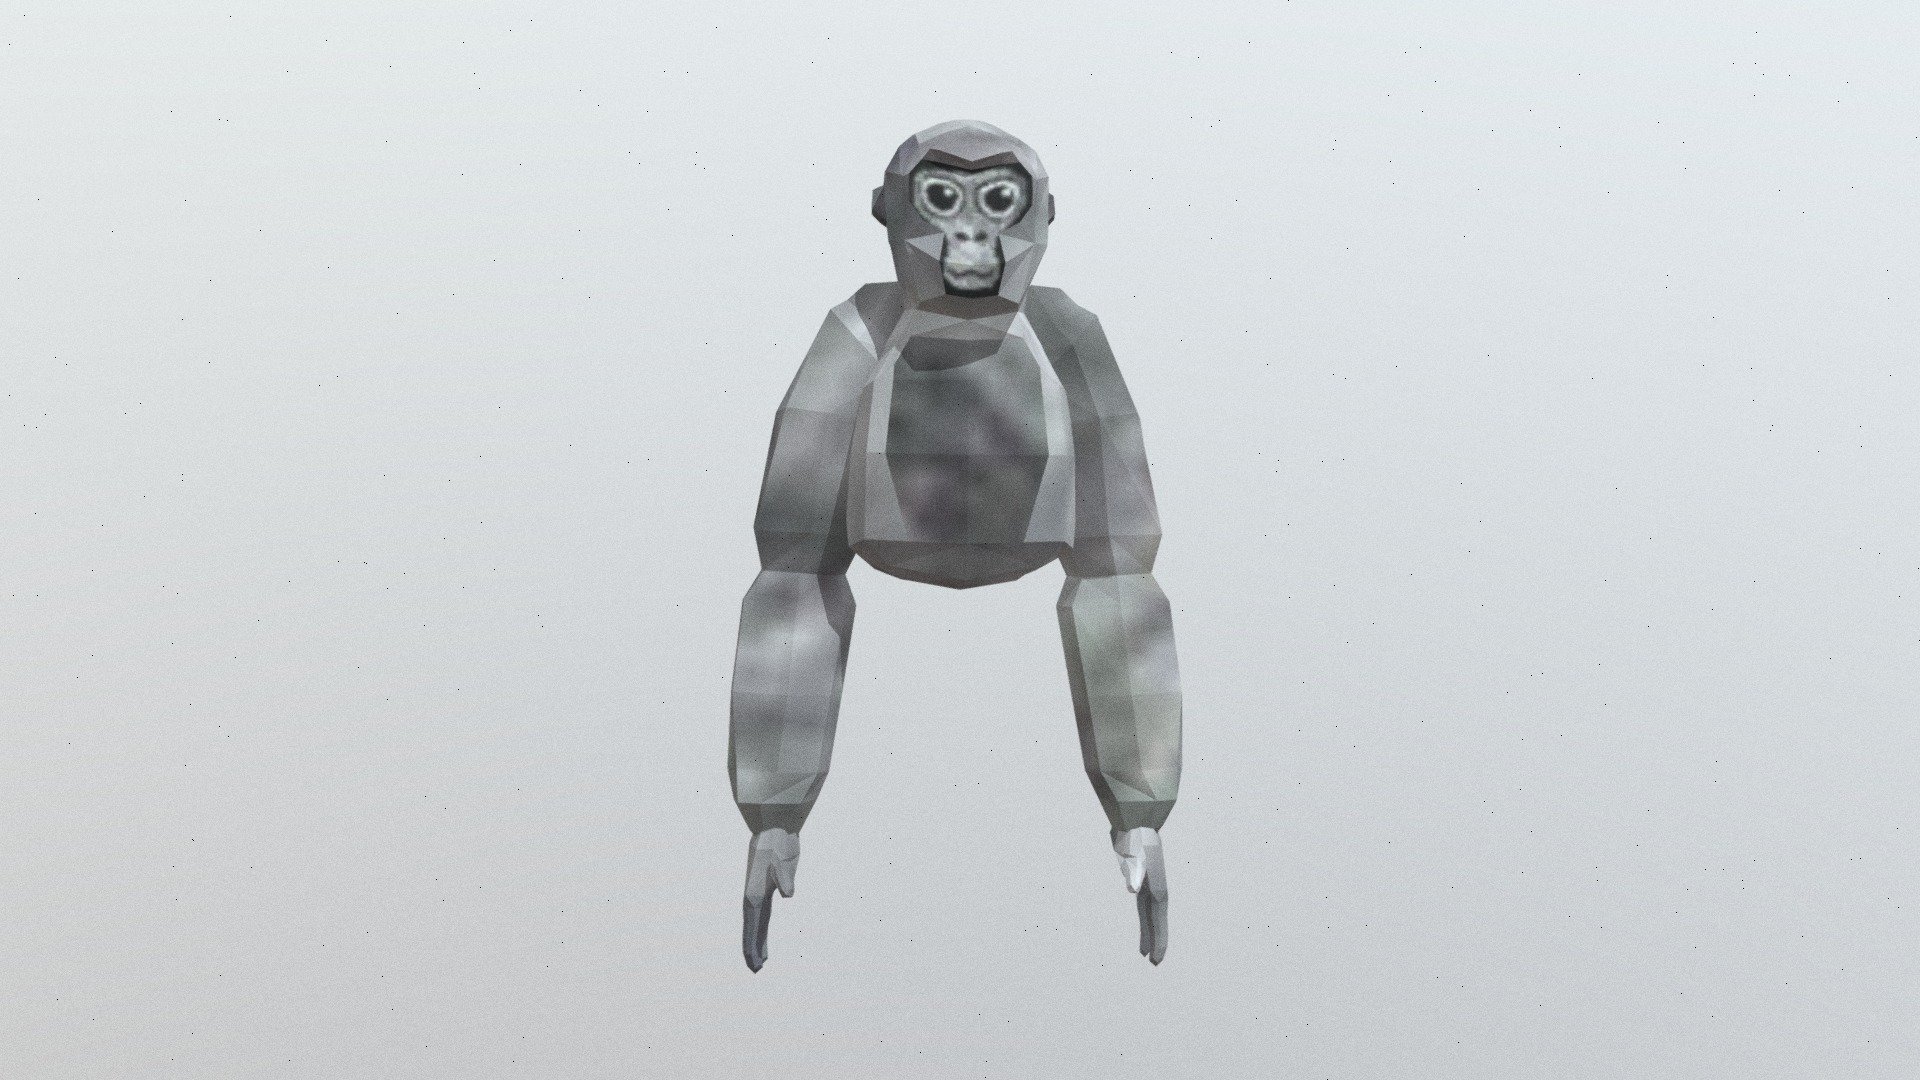 gorilla tag monkey picture